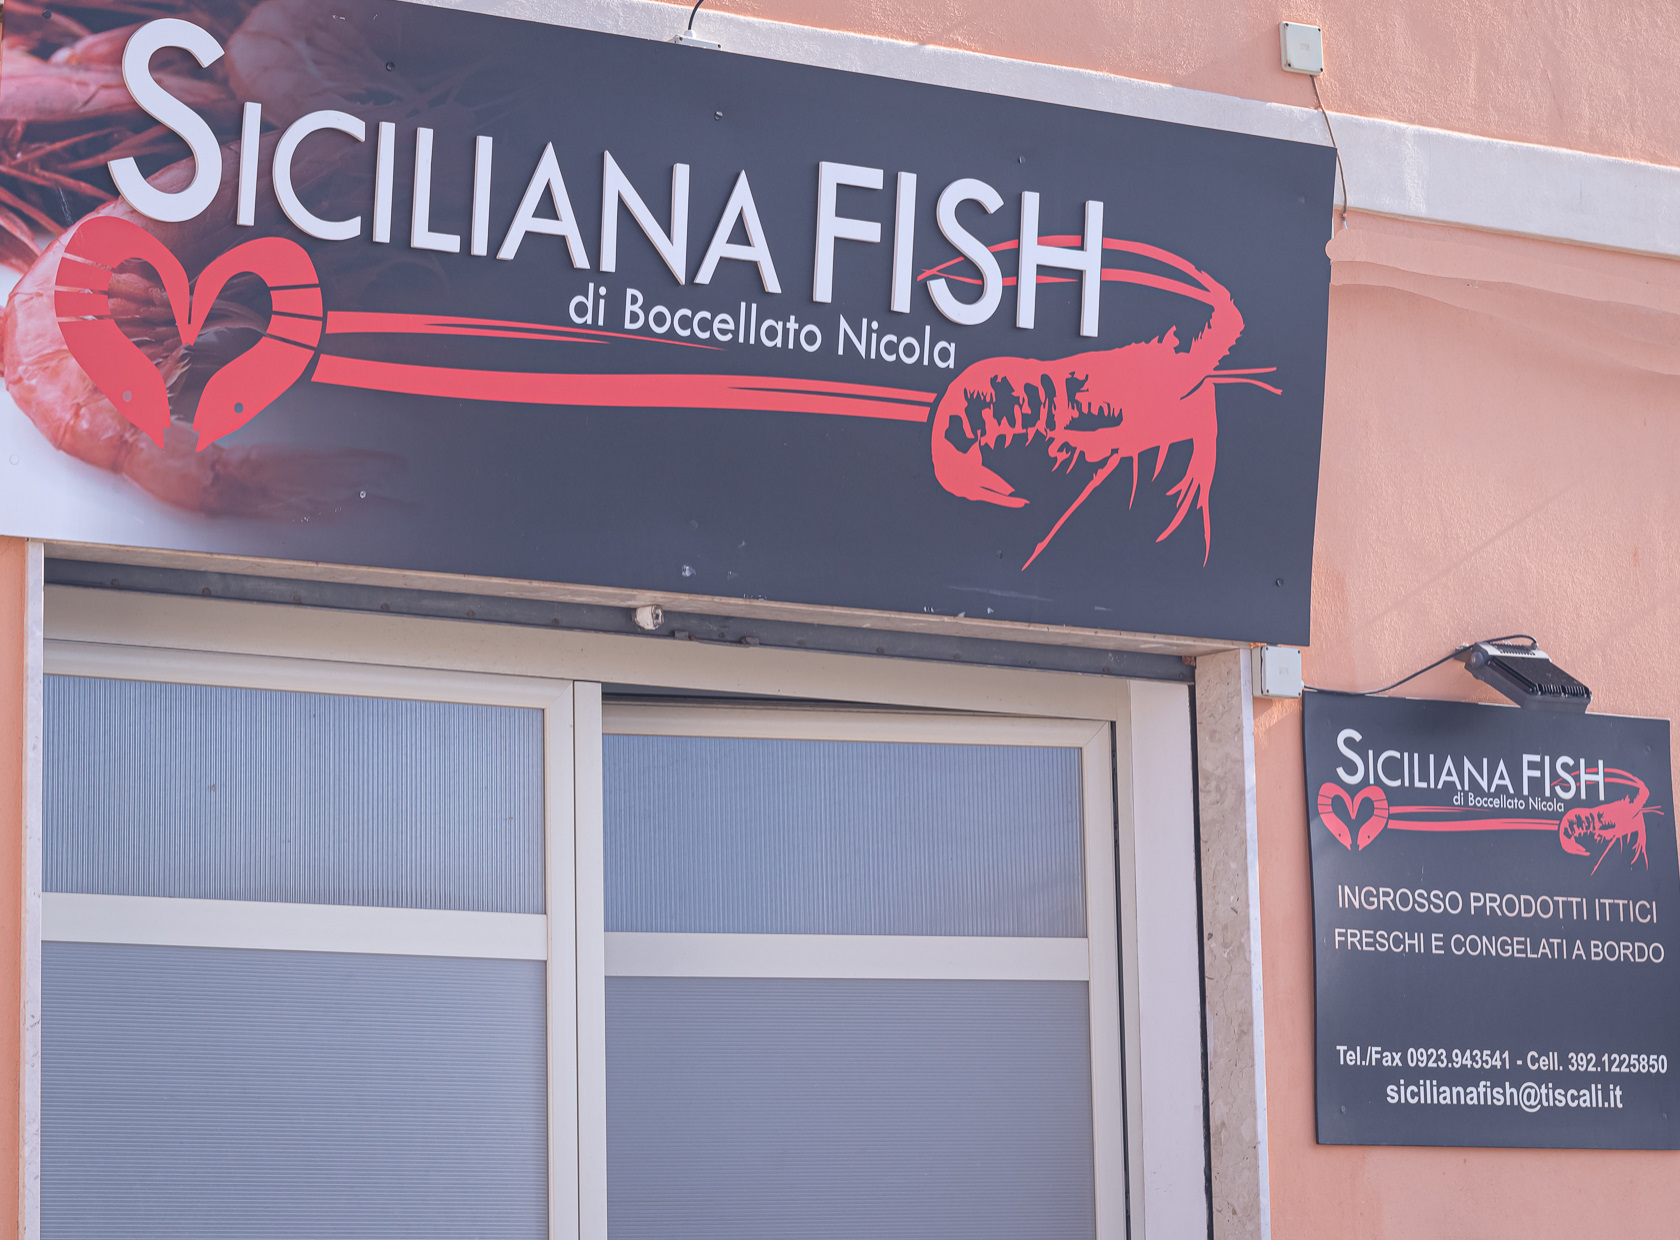 Siciliana Fish sign, wholesale sale of seafood products Mazara del Vallo